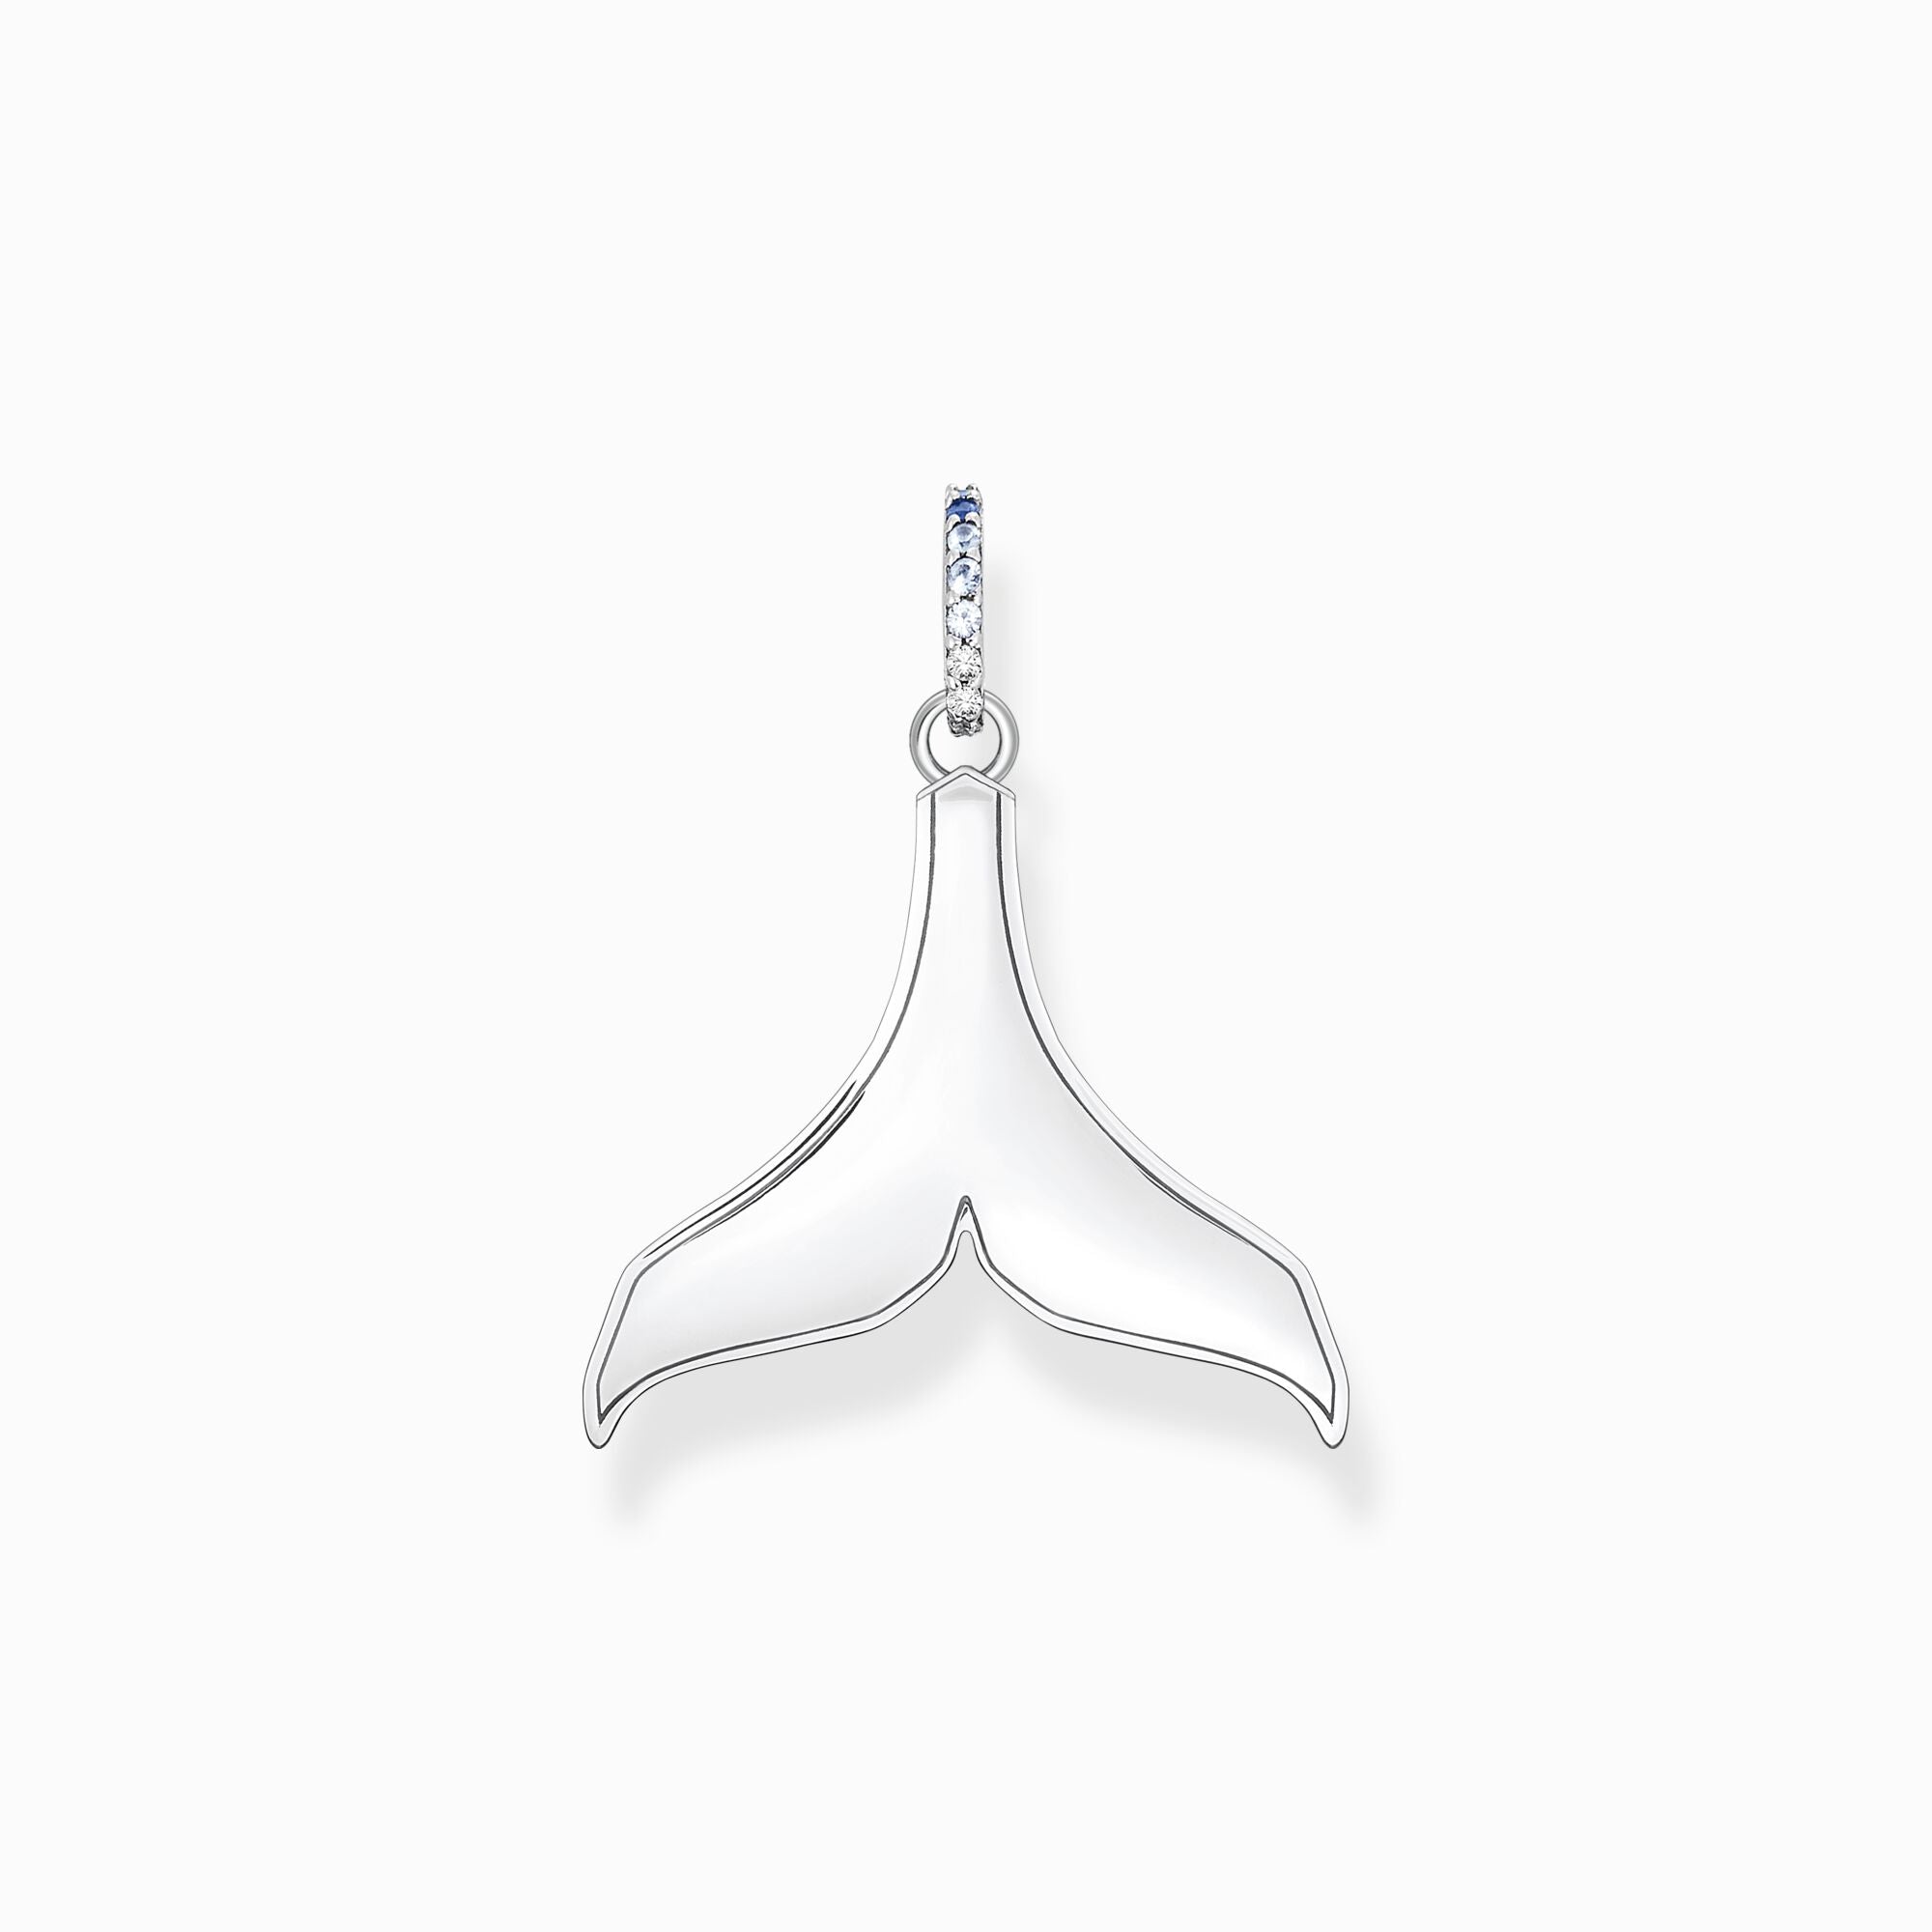 Thomas Sabo Ocean Dolphin Tail Din with Blue Stone Pendant